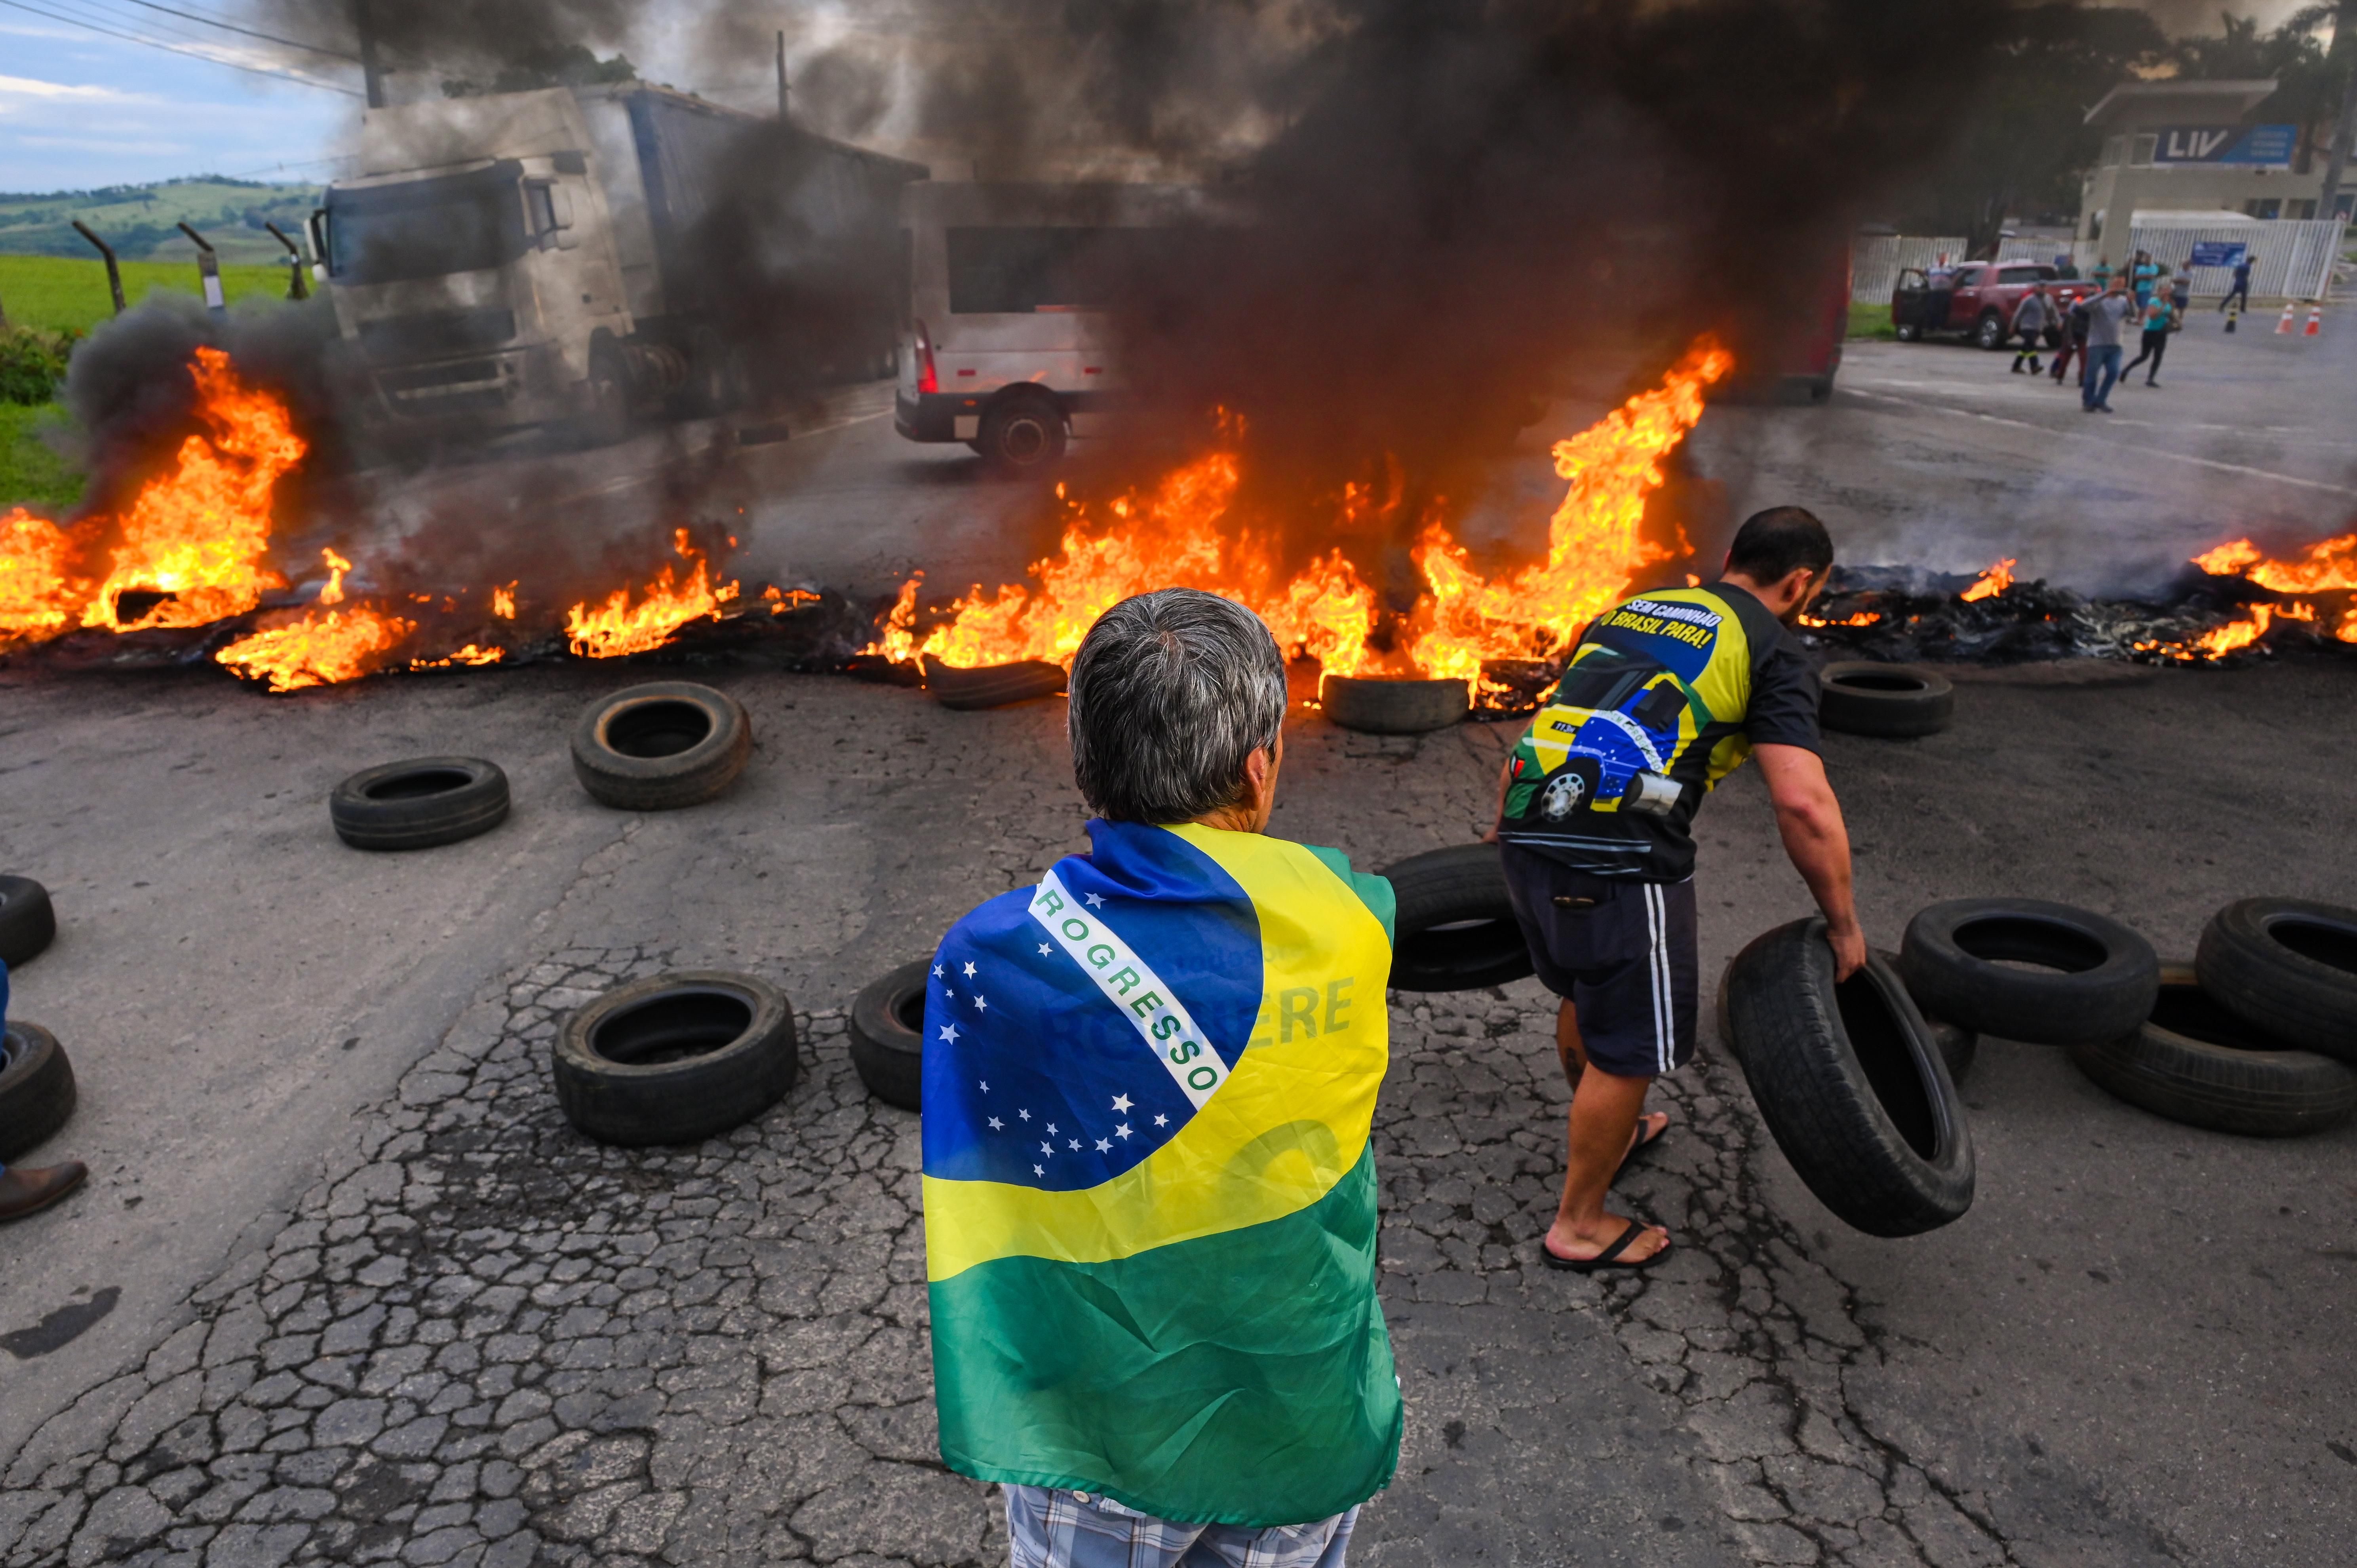 Bolsonaro supporters form a burning barricade to block a road on October 31, 2022 in Varginha, Brazil.